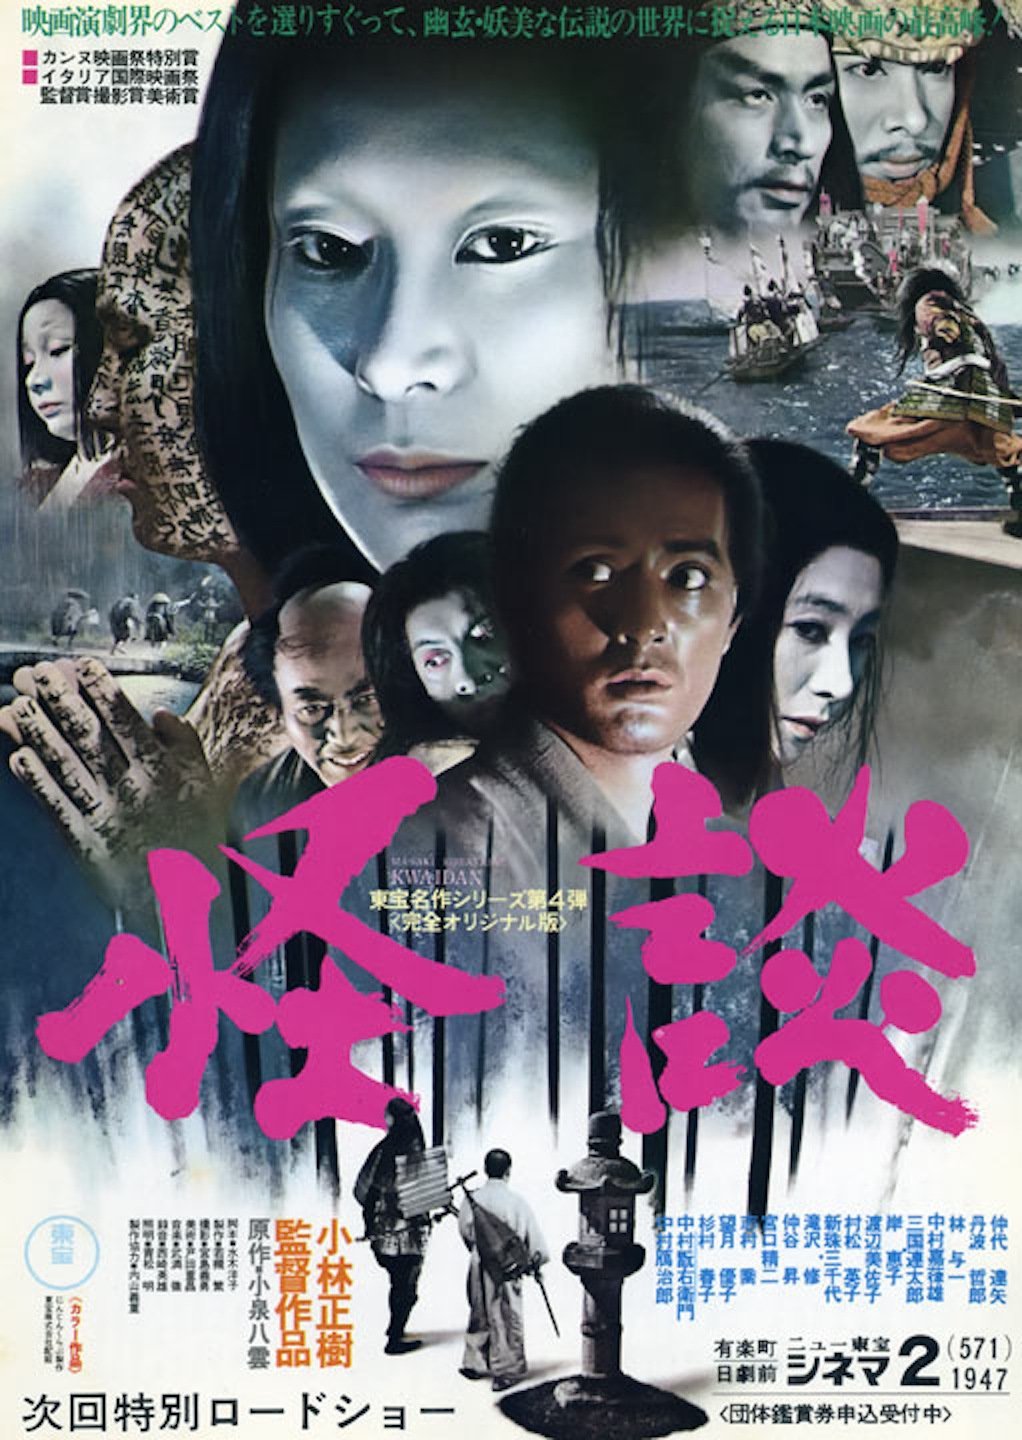 Japanese poster of the movie Kaidan